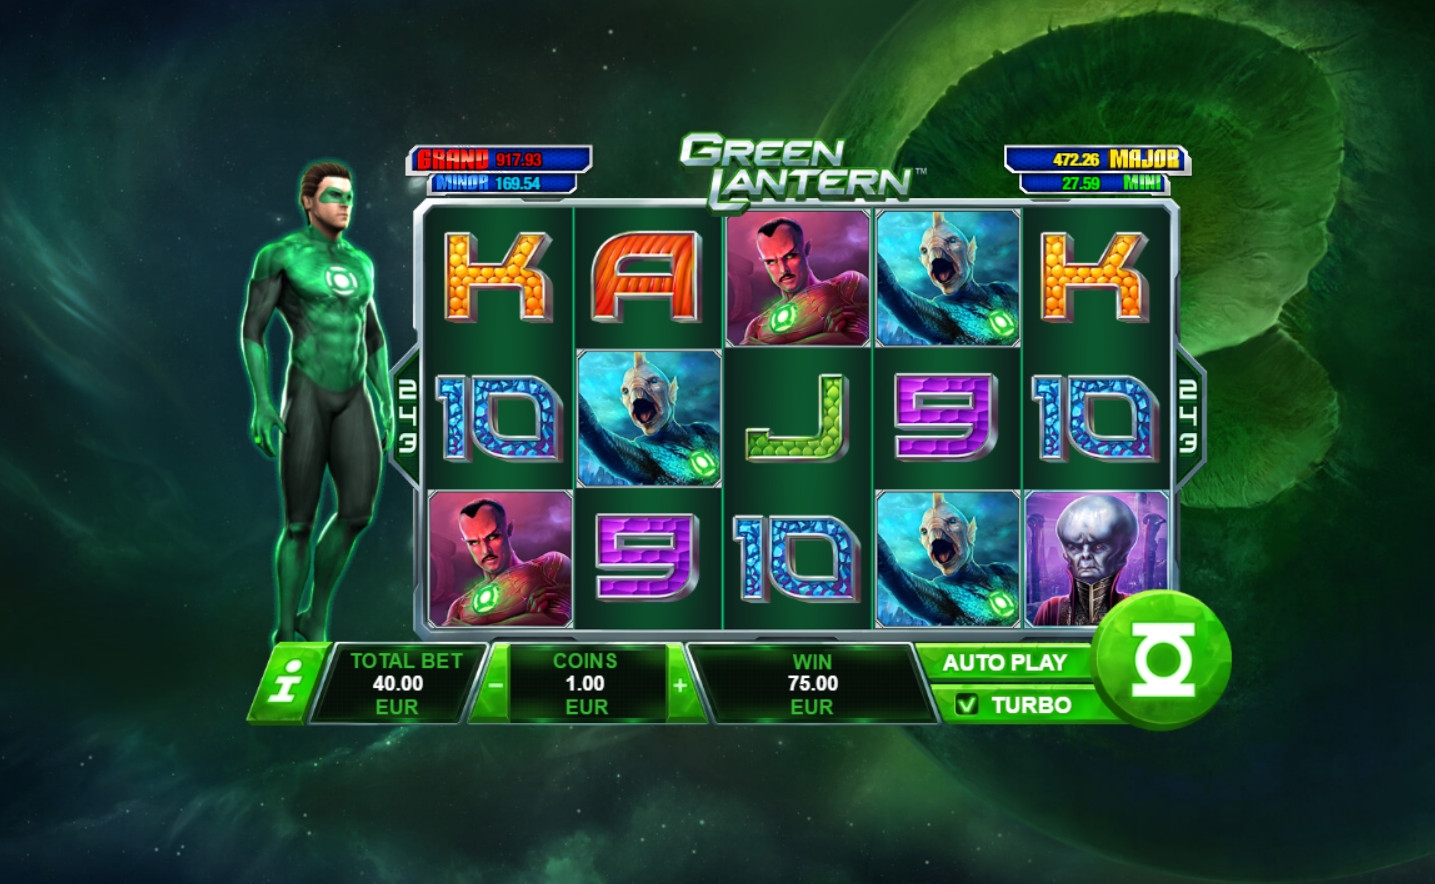 Green Lantern (Green Lantern) from category Slots